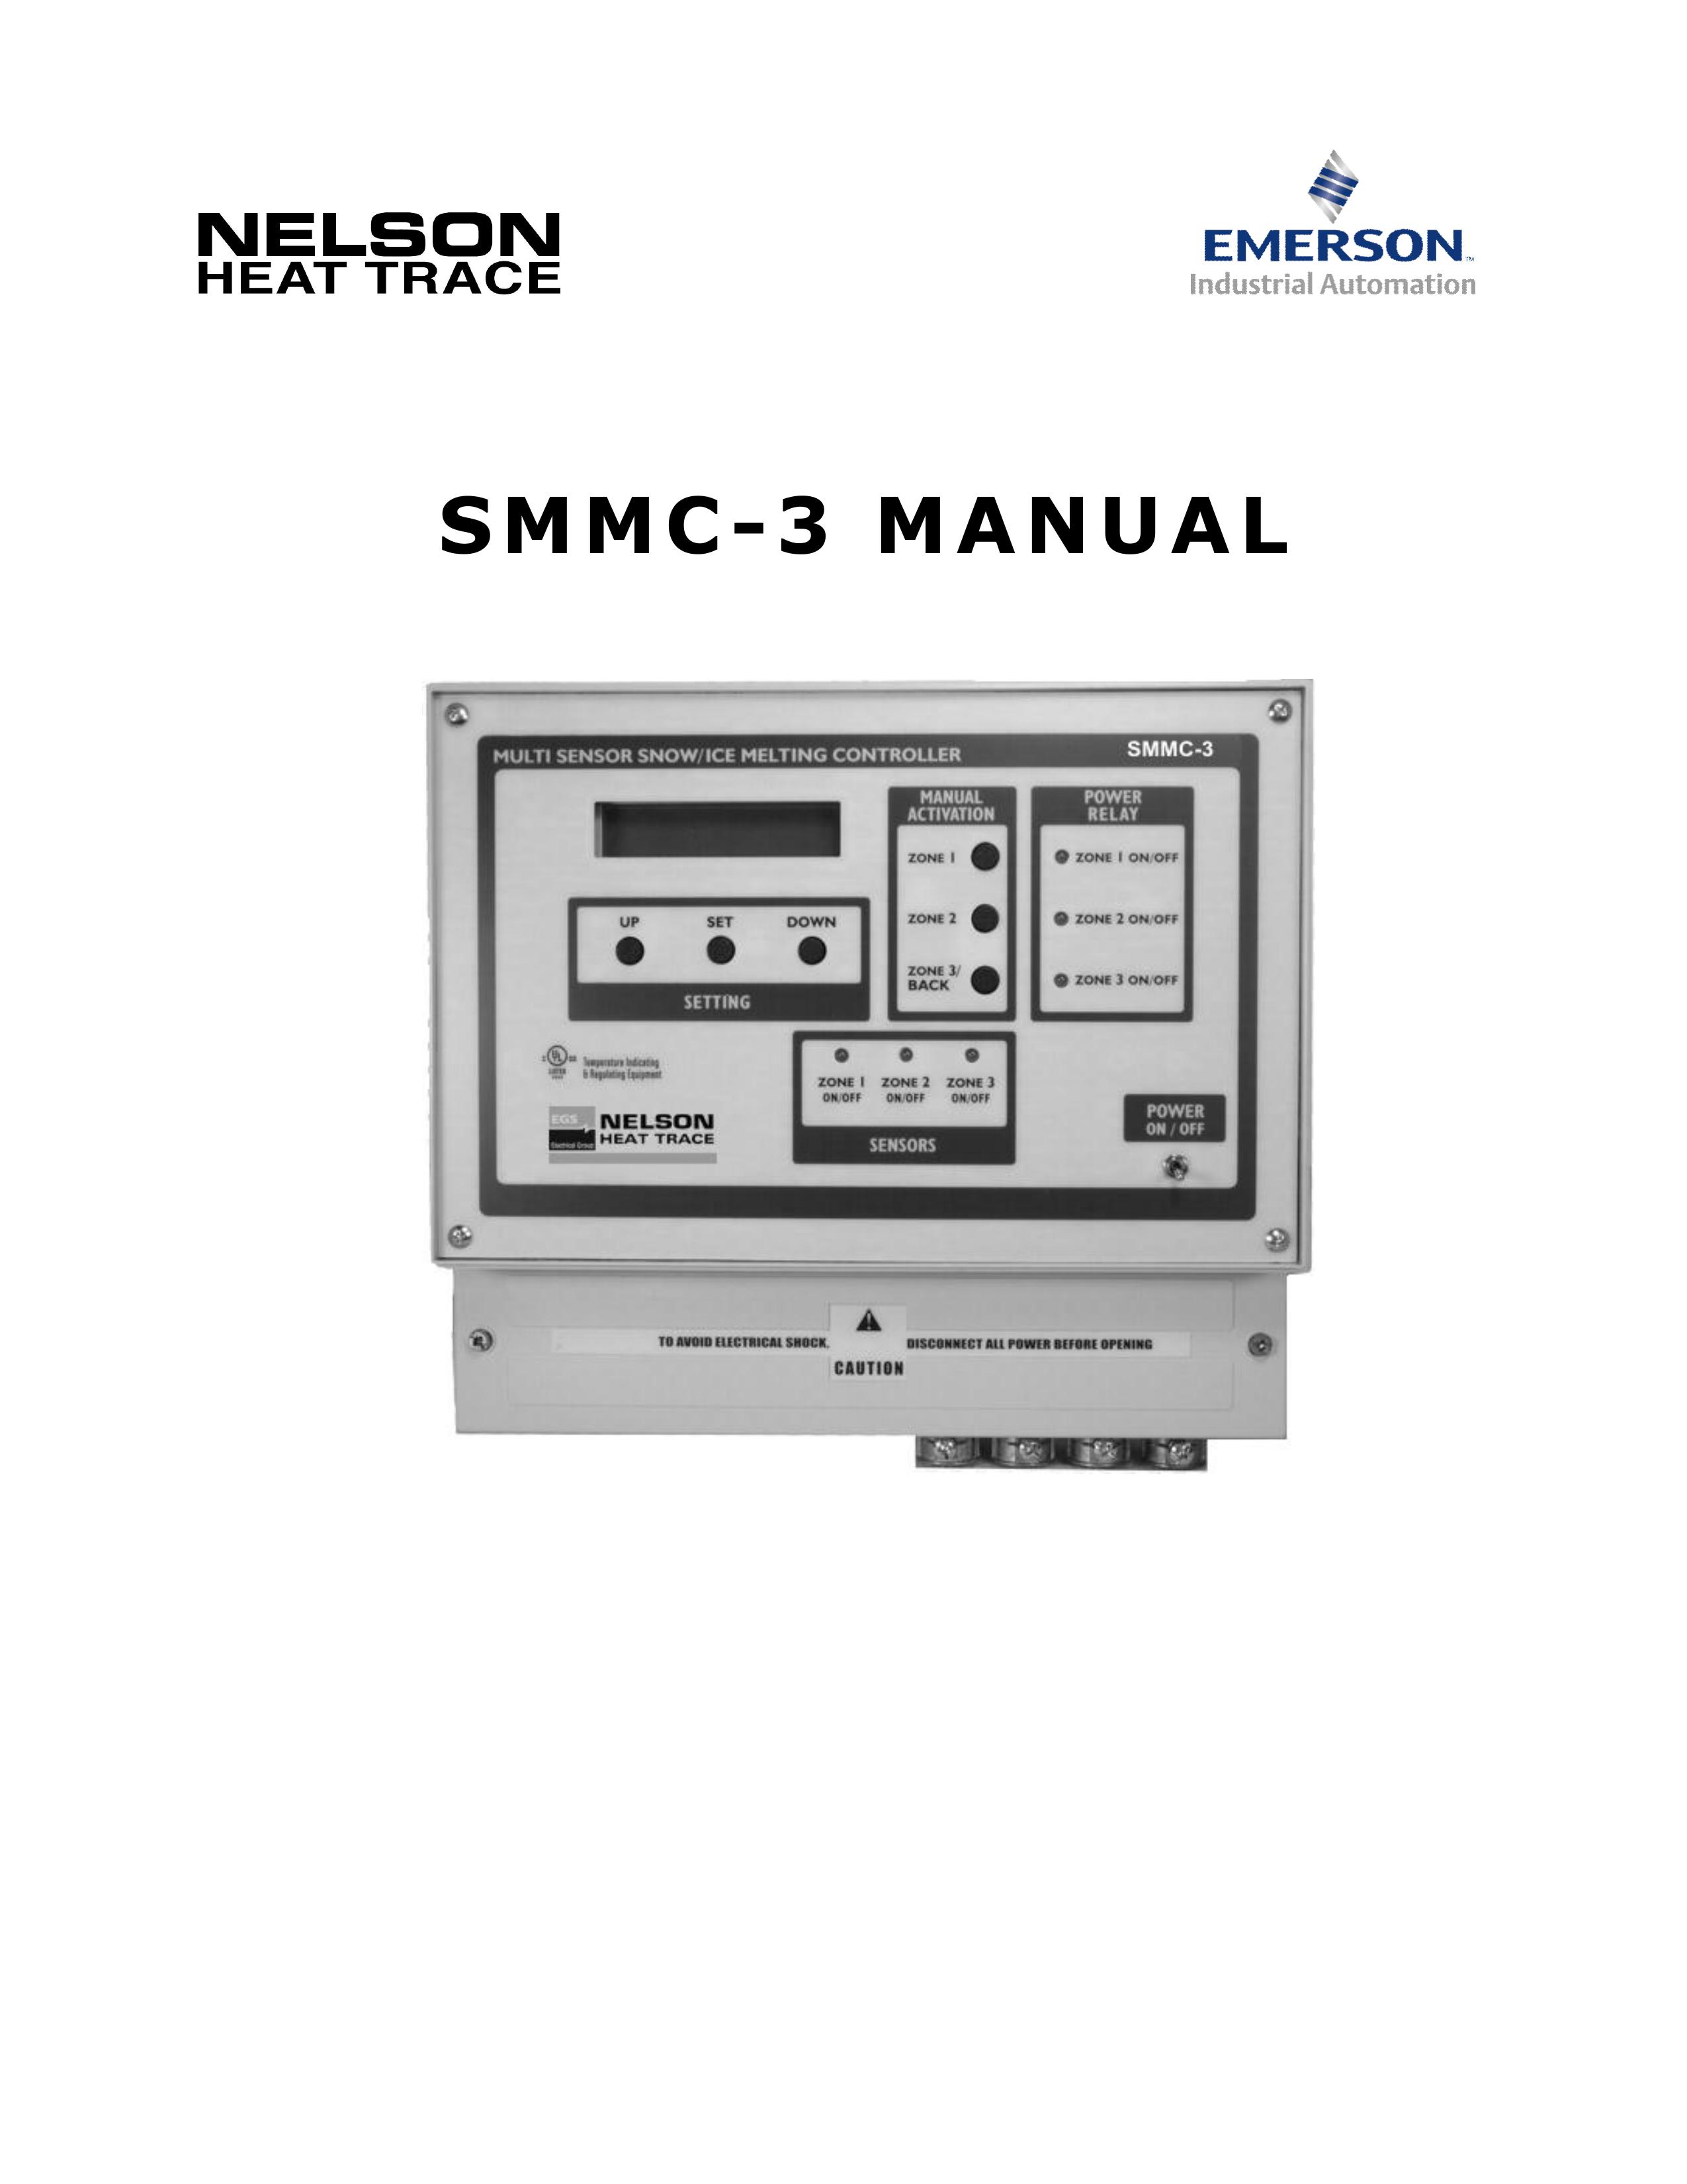 Emerson SMMC-3 Marine Heating System User Manual